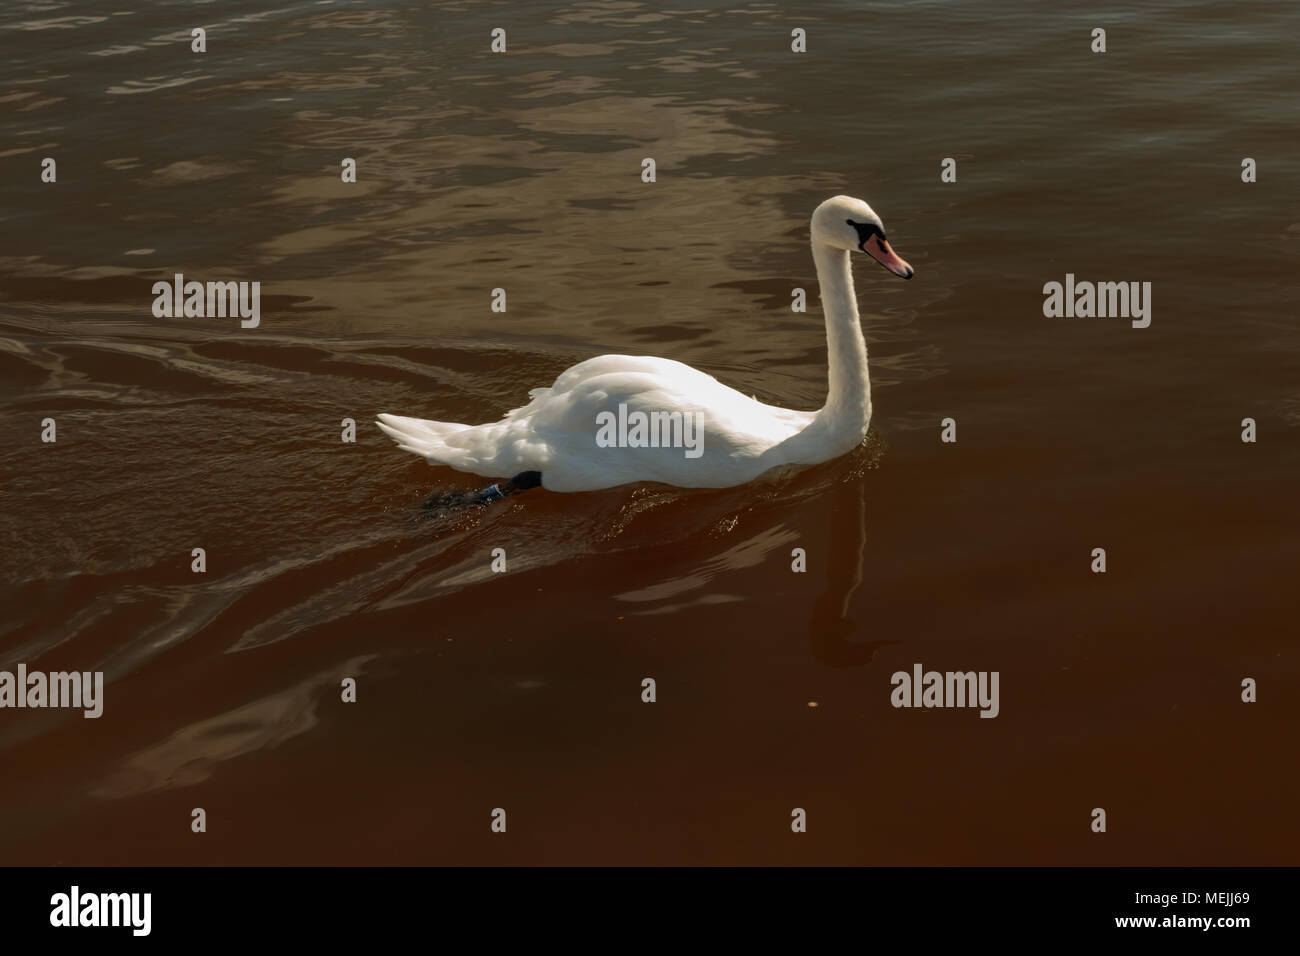 Swans swimming in Roundhay Park Lake Stock Photo